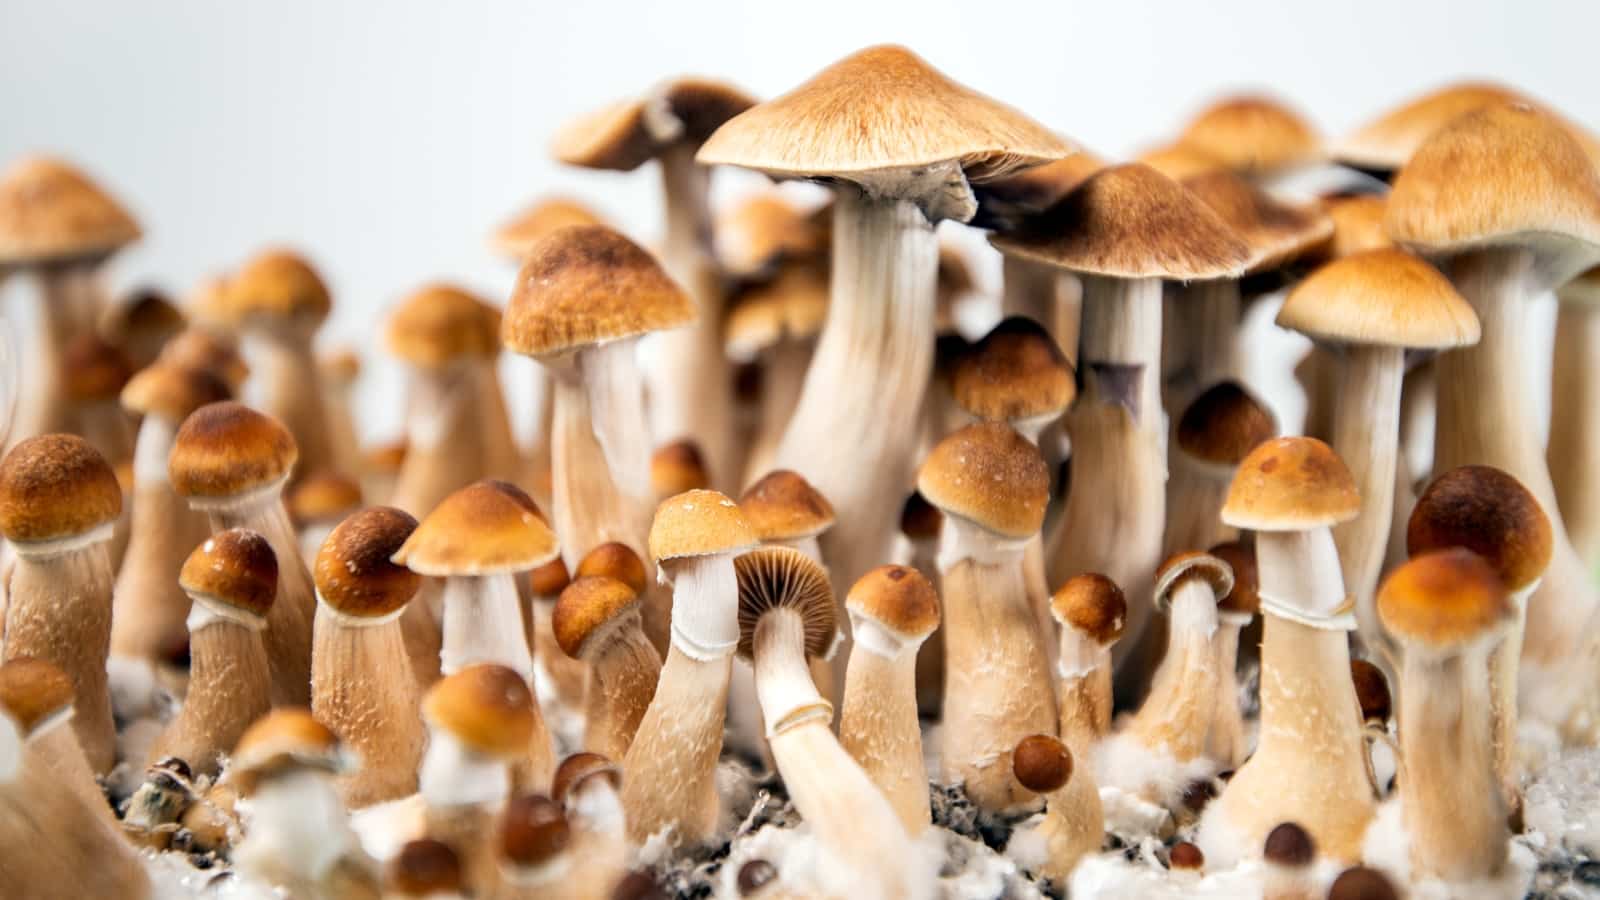 cambodian mushrooms popular magic mushroom psilocybin strains